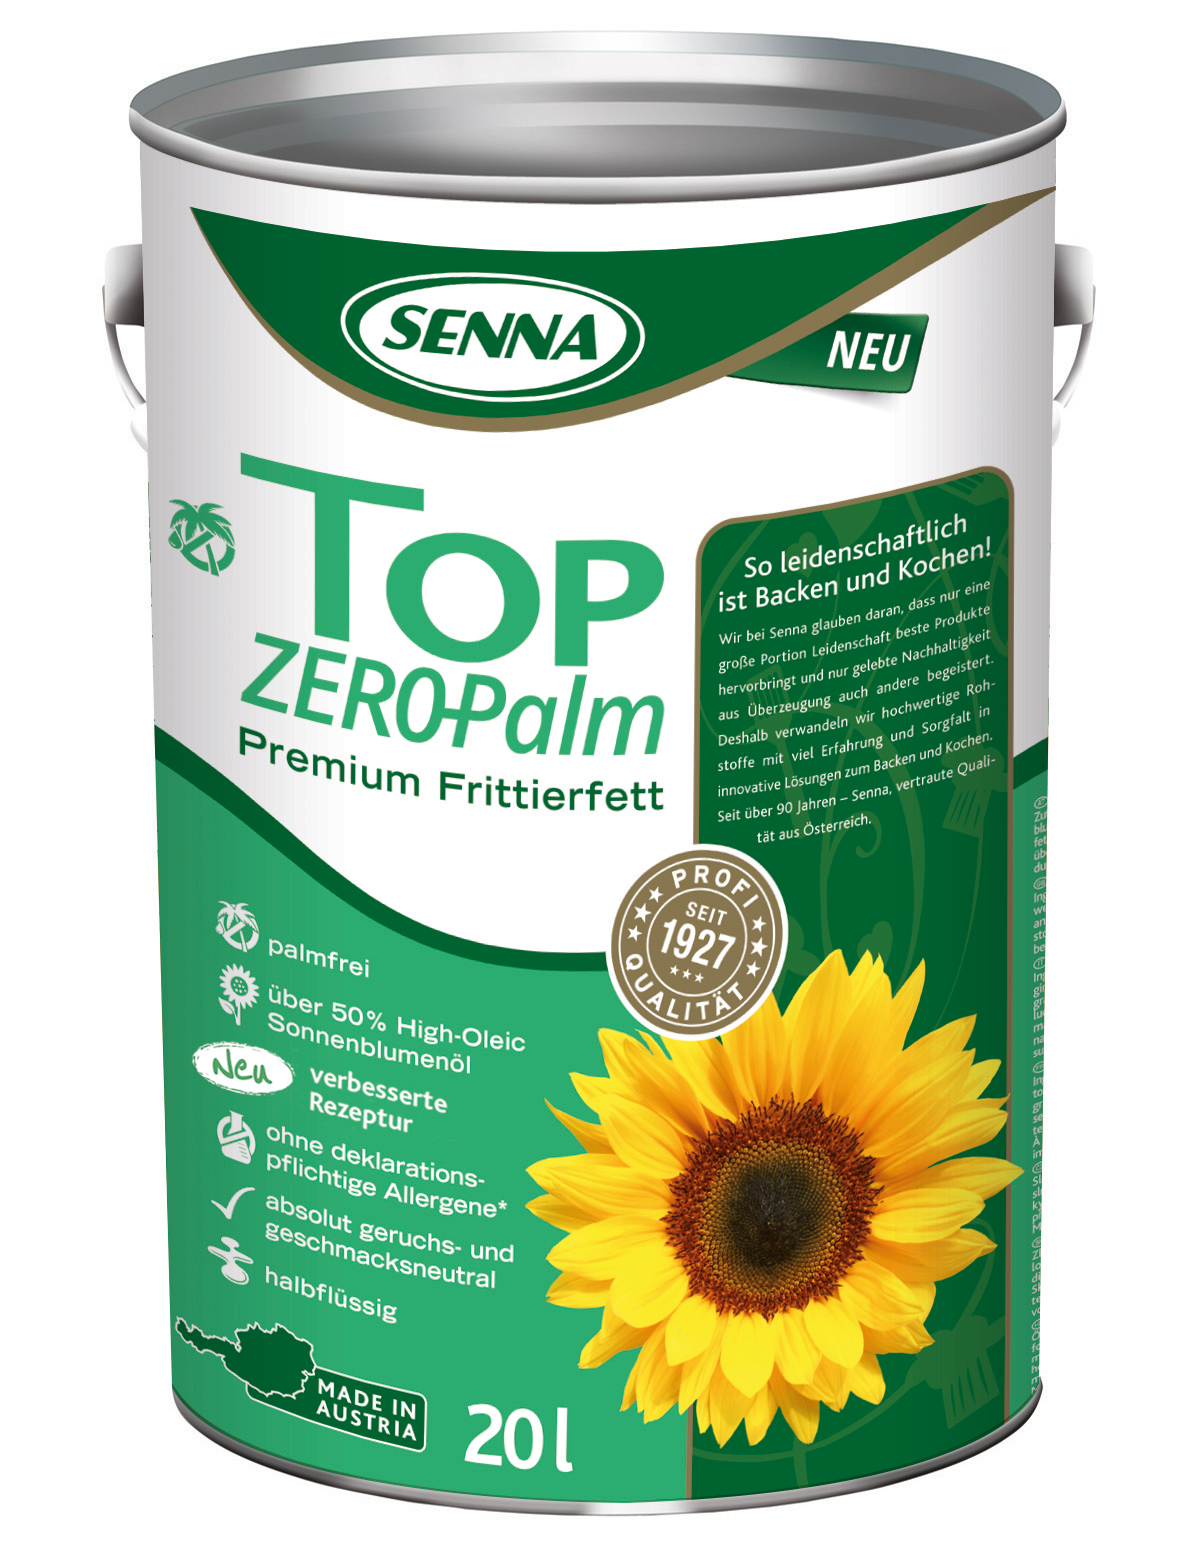 Senna Top Zero Palm